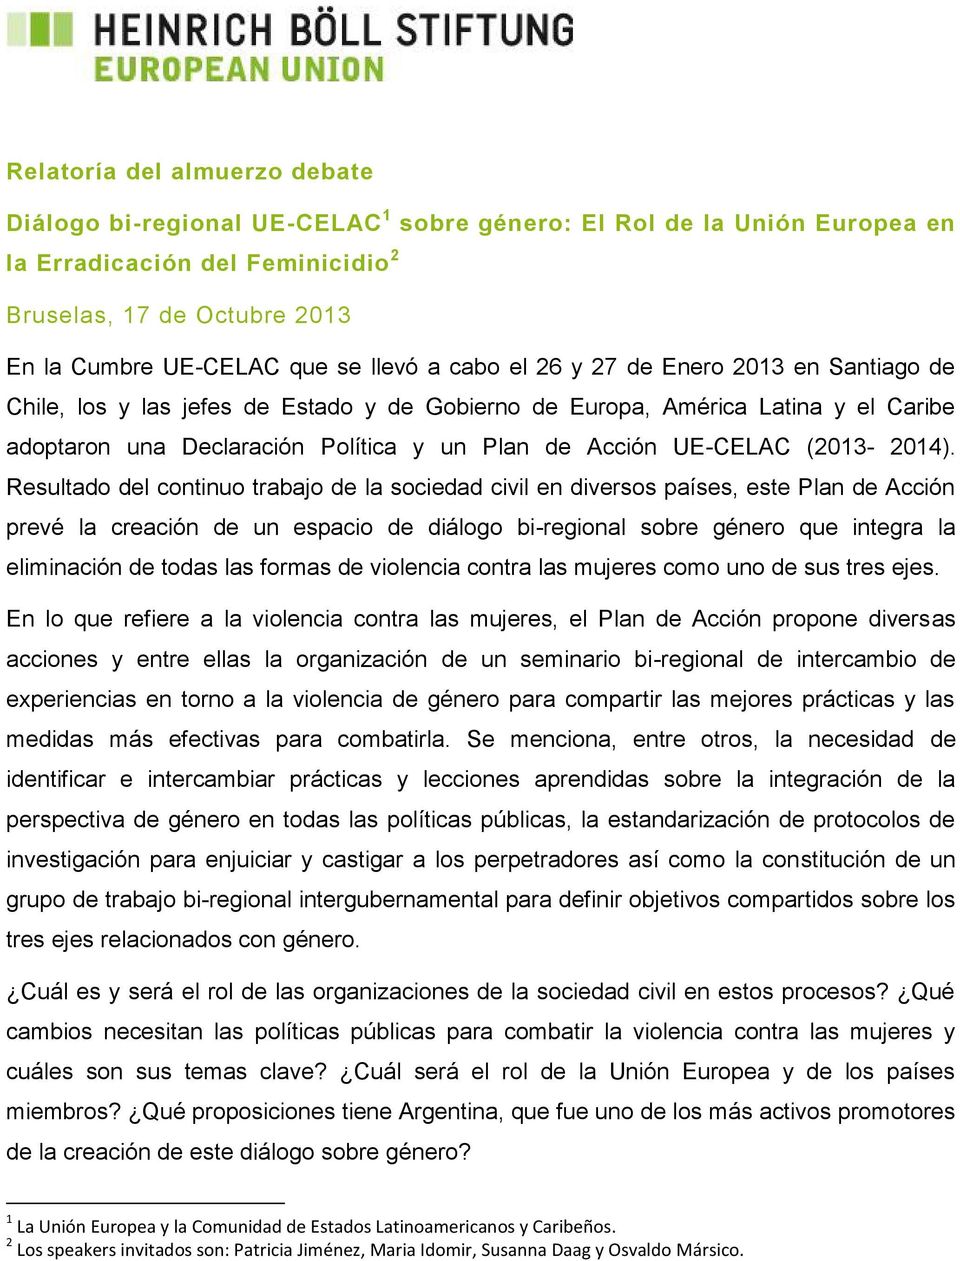 UE-CELAC (2013-2014).